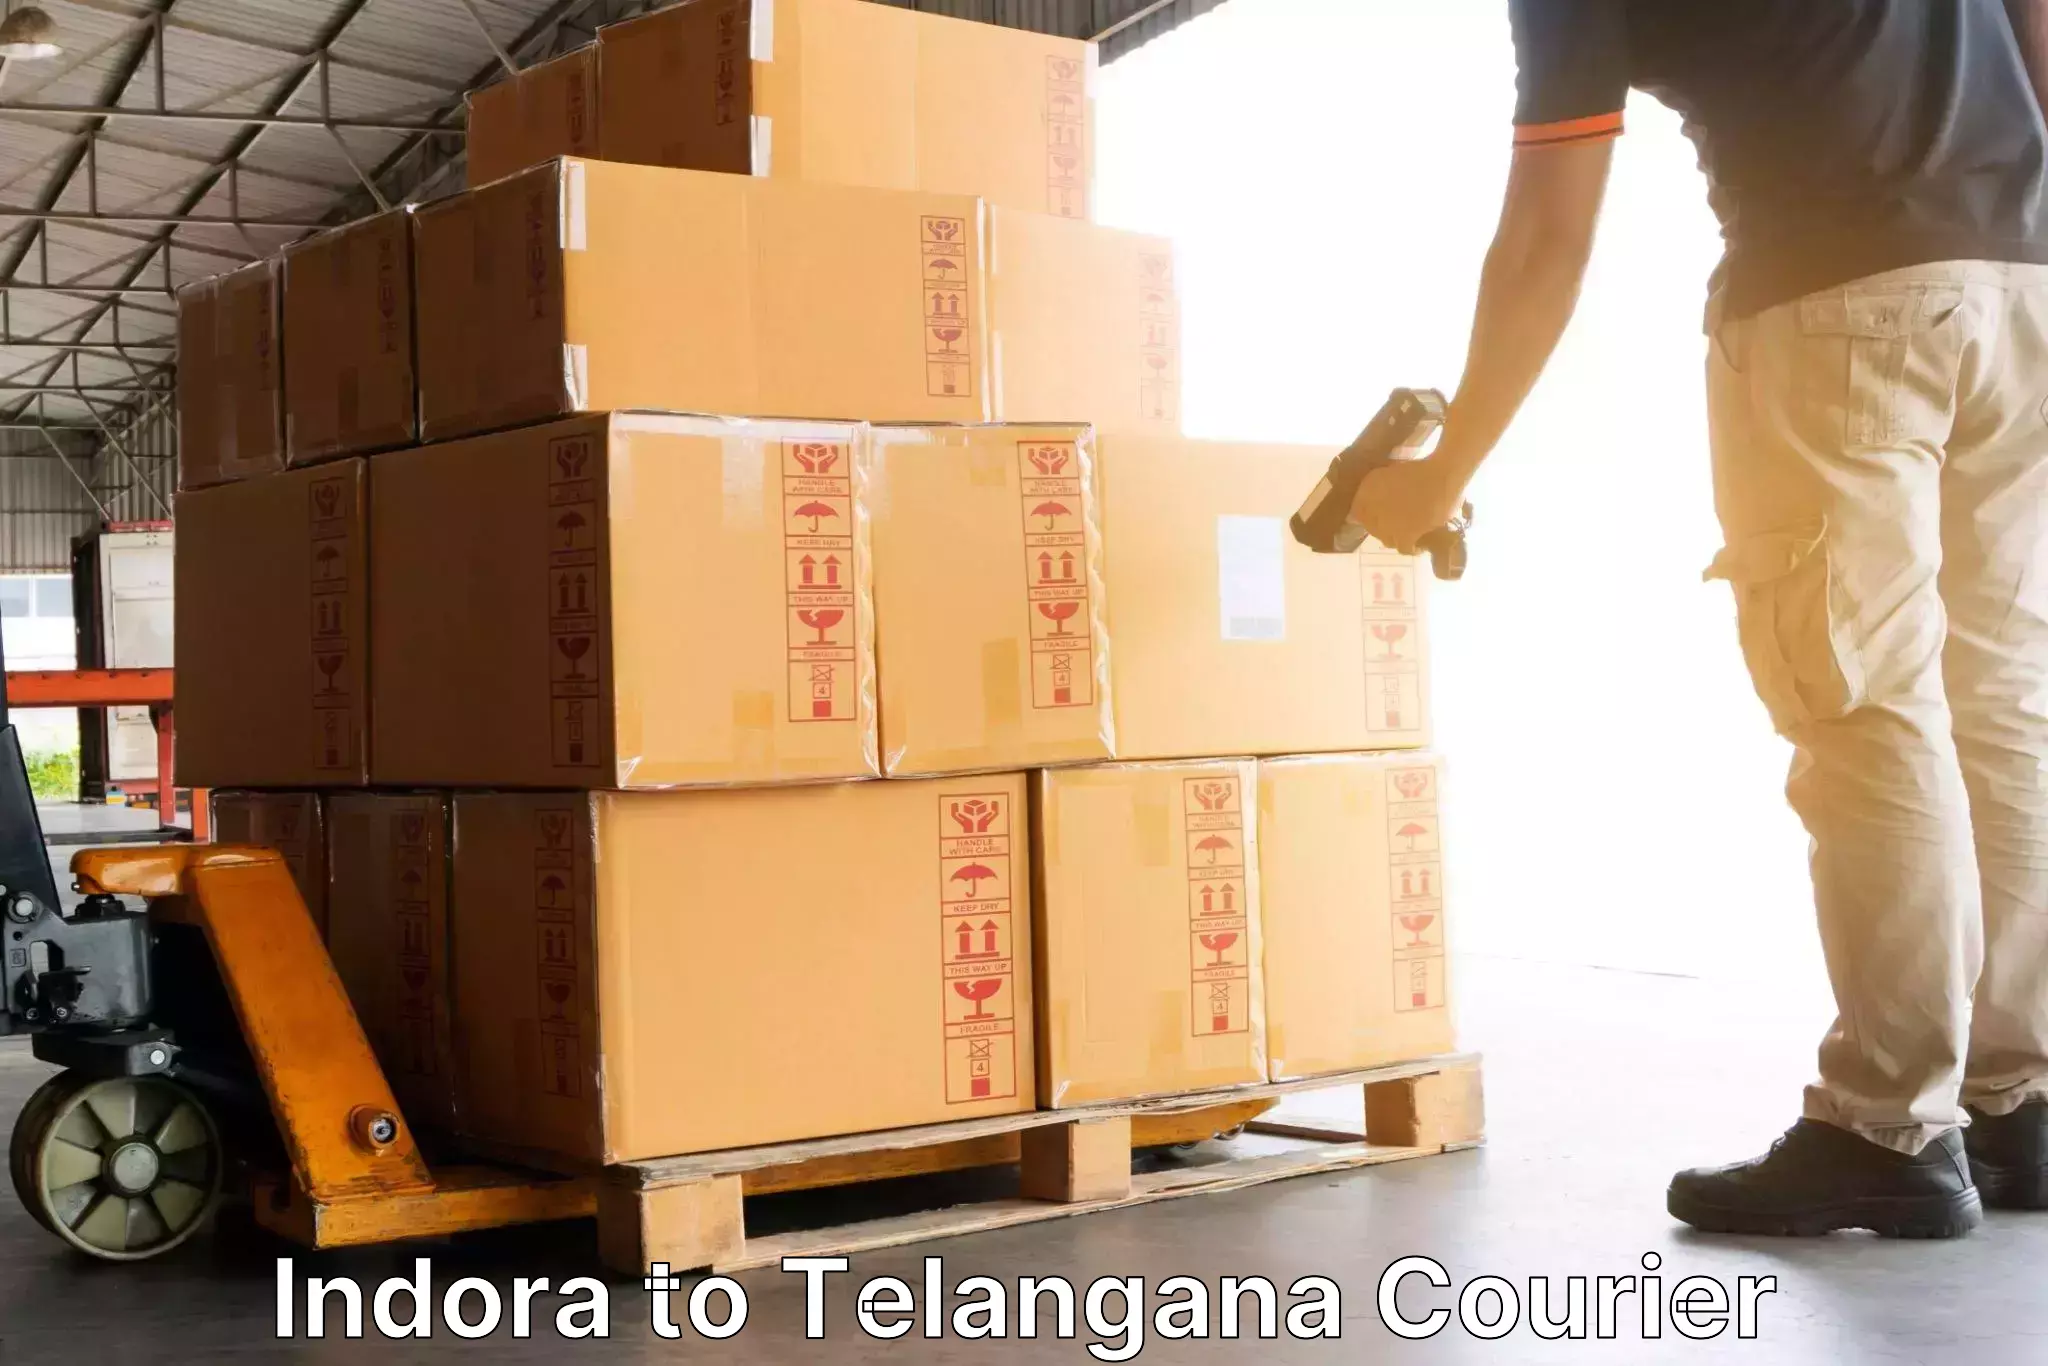 Bulk shipping discounts Indora to Madgulapally